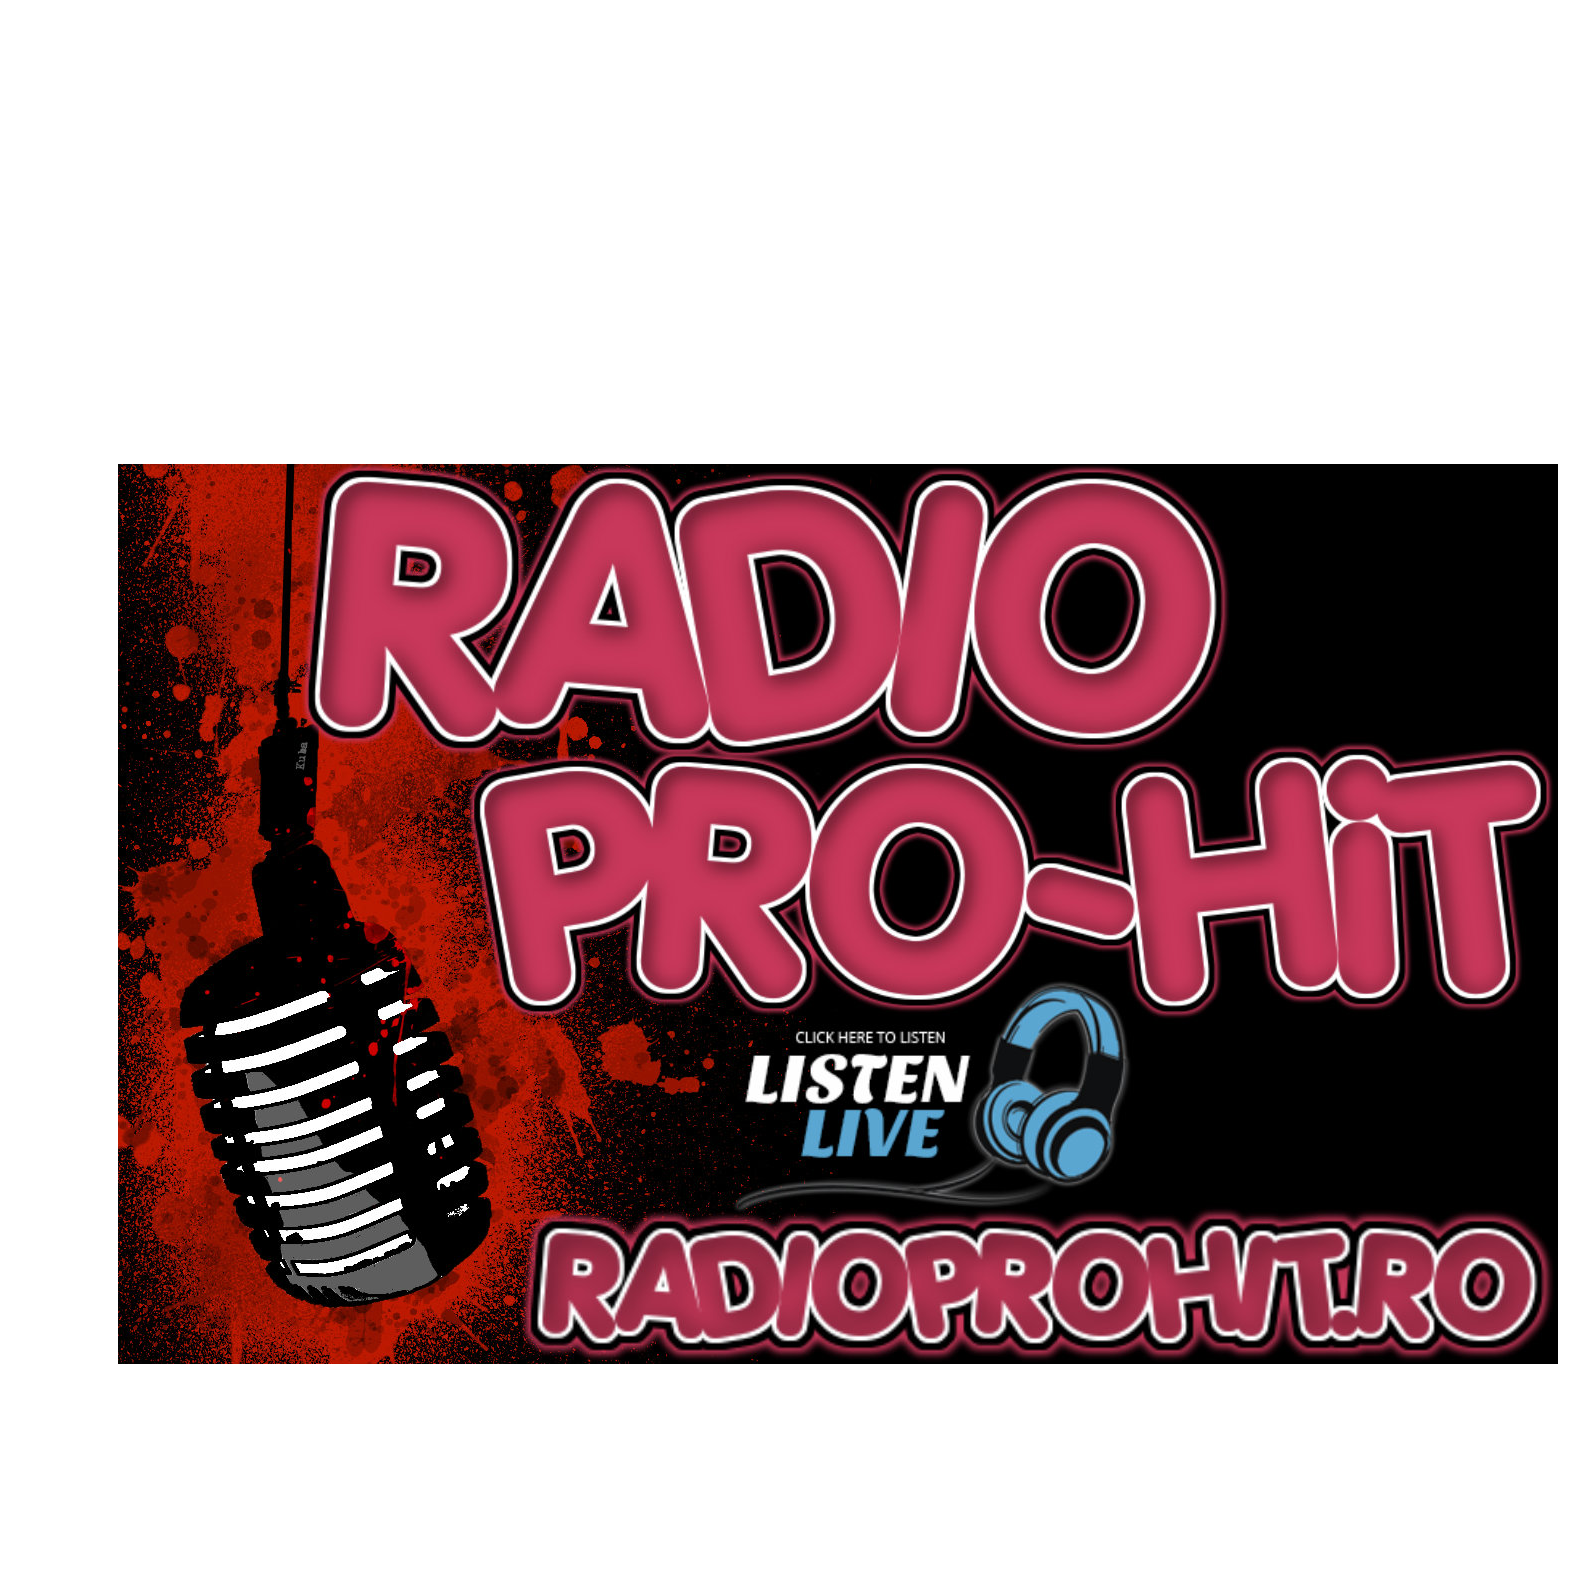 Radio Pro-Hit Manele - www.radioprohit